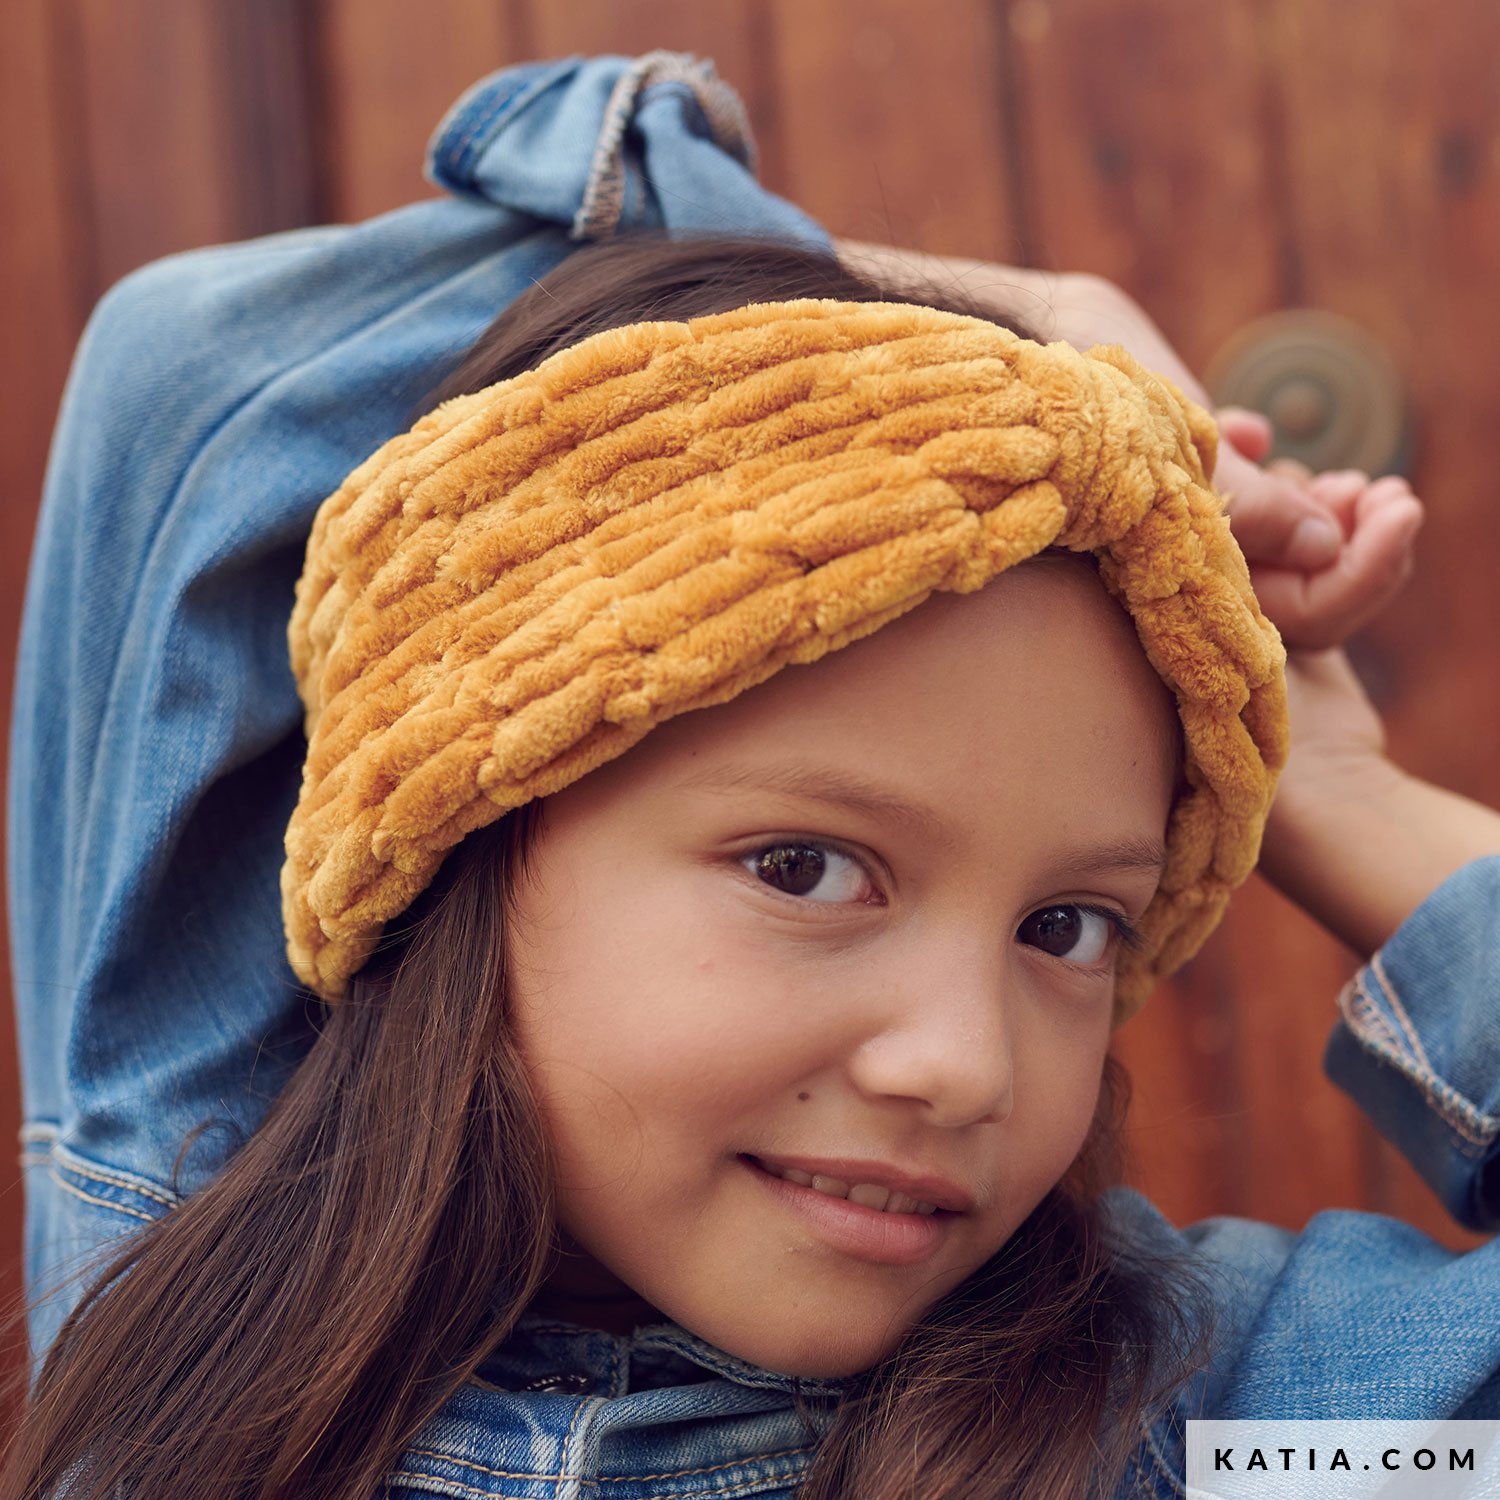 Creativity for Kids Quick Knit Headband Making Kit - Kids Knitting Kit for